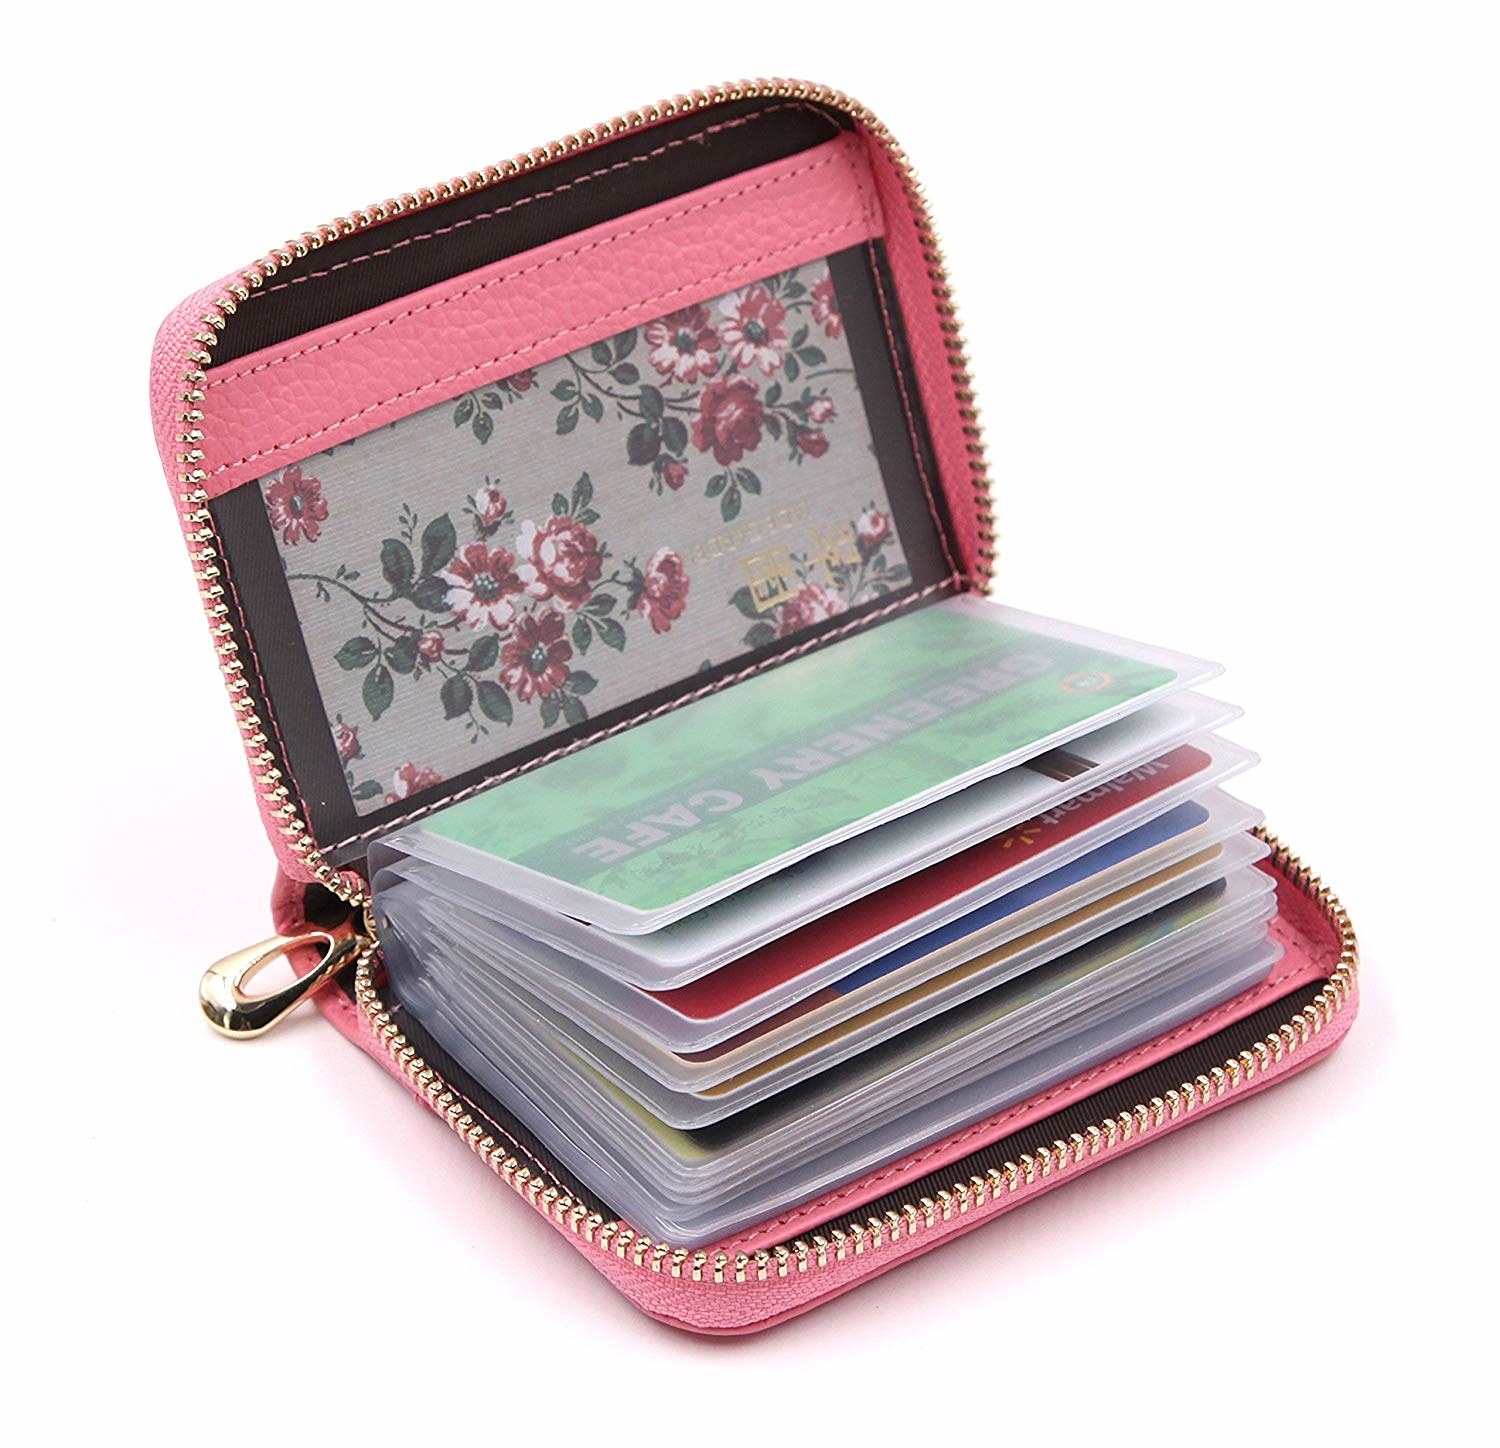 A Pink Women’s Long PU Leather Wallet with Credit Card Holders Money Organizer Zipper Purse Wristlet Handbag Clutch Wallet 